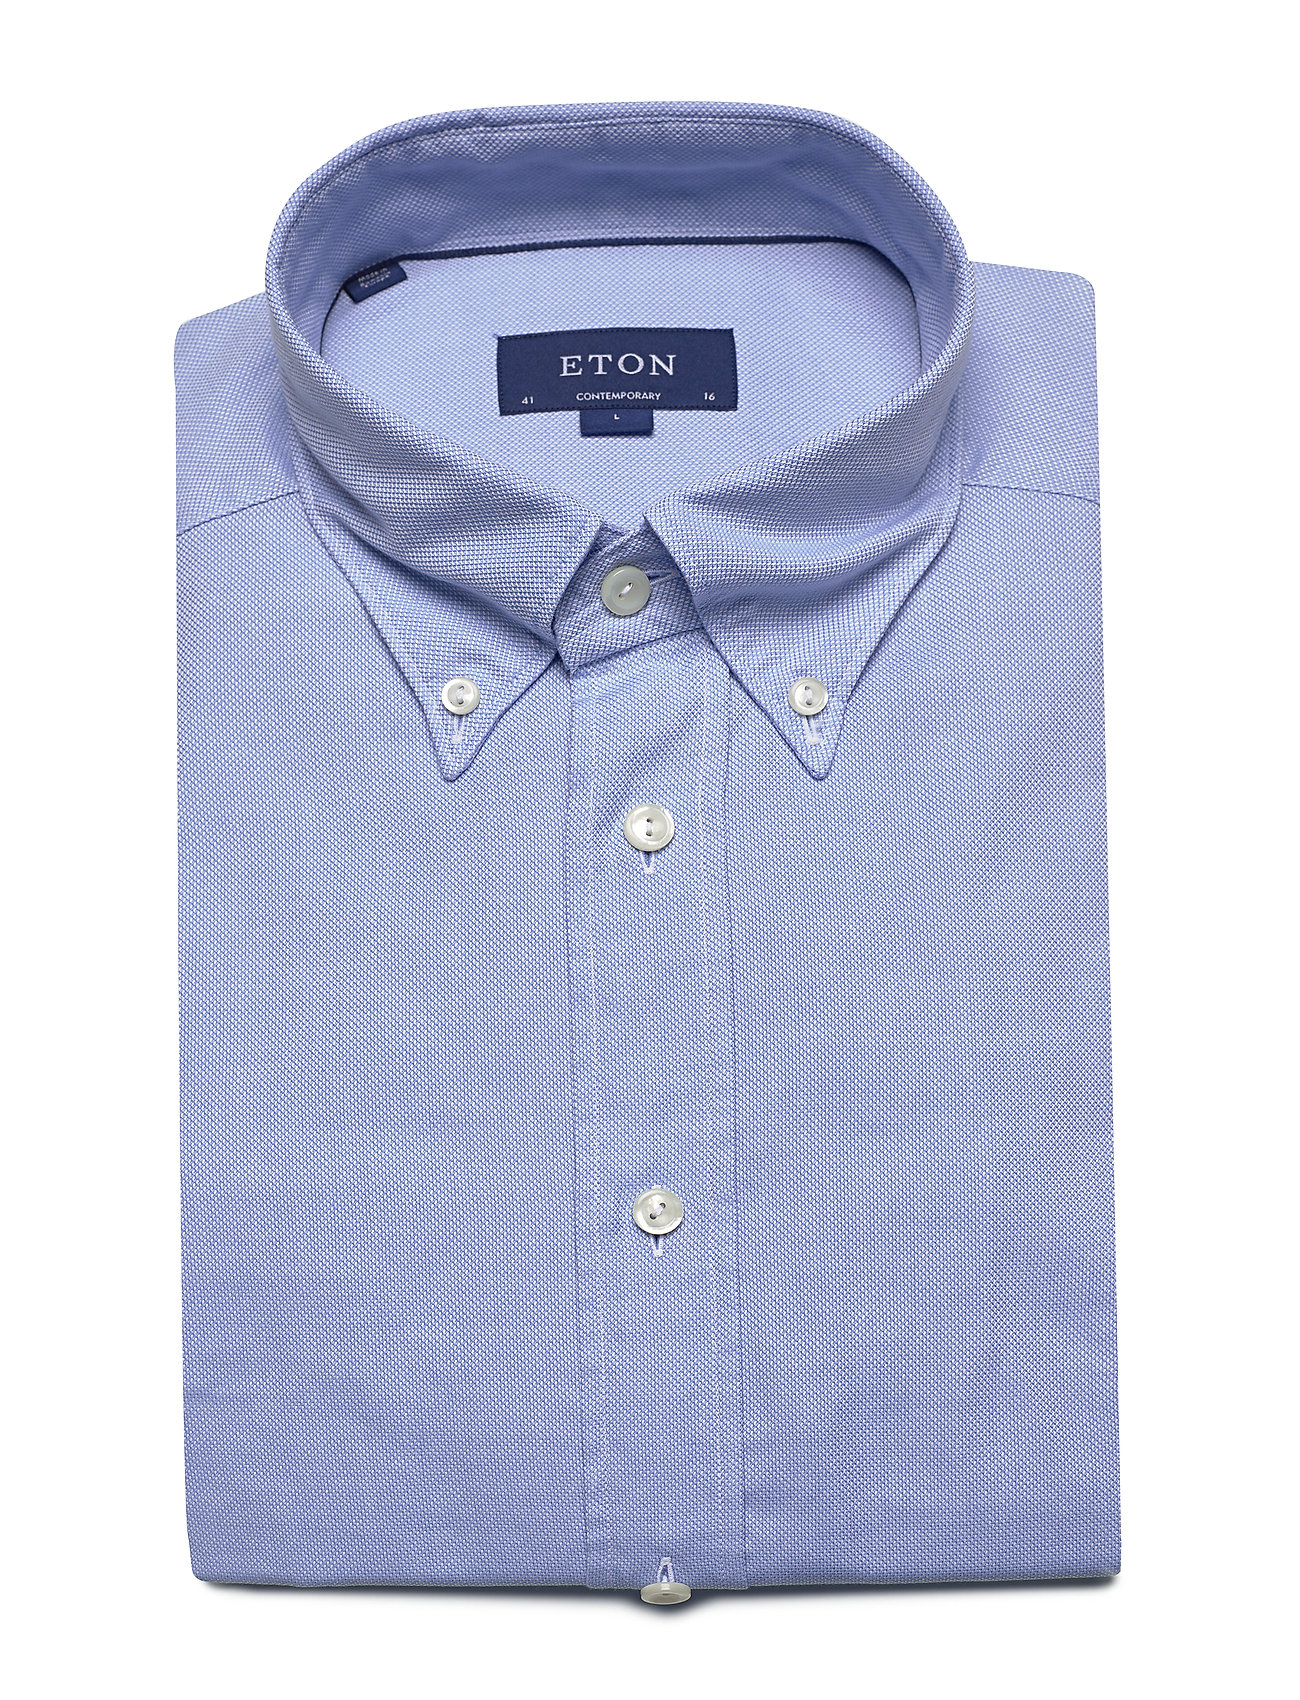 Eton - Royal oxford shirt - Contemporary fit - basic-hemden - blue - 3